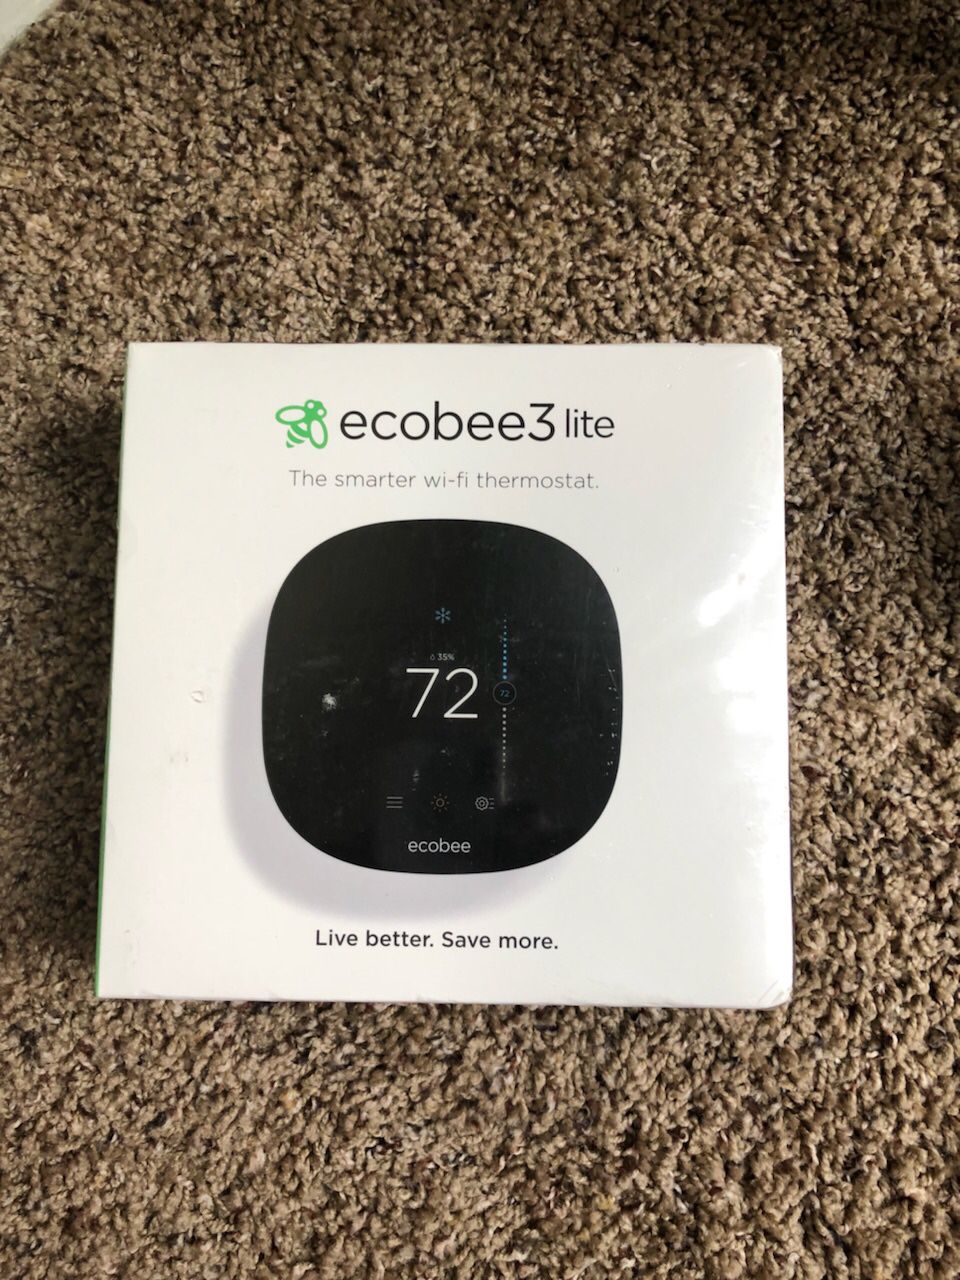 Ecobee 3 lite WiFi thermostat